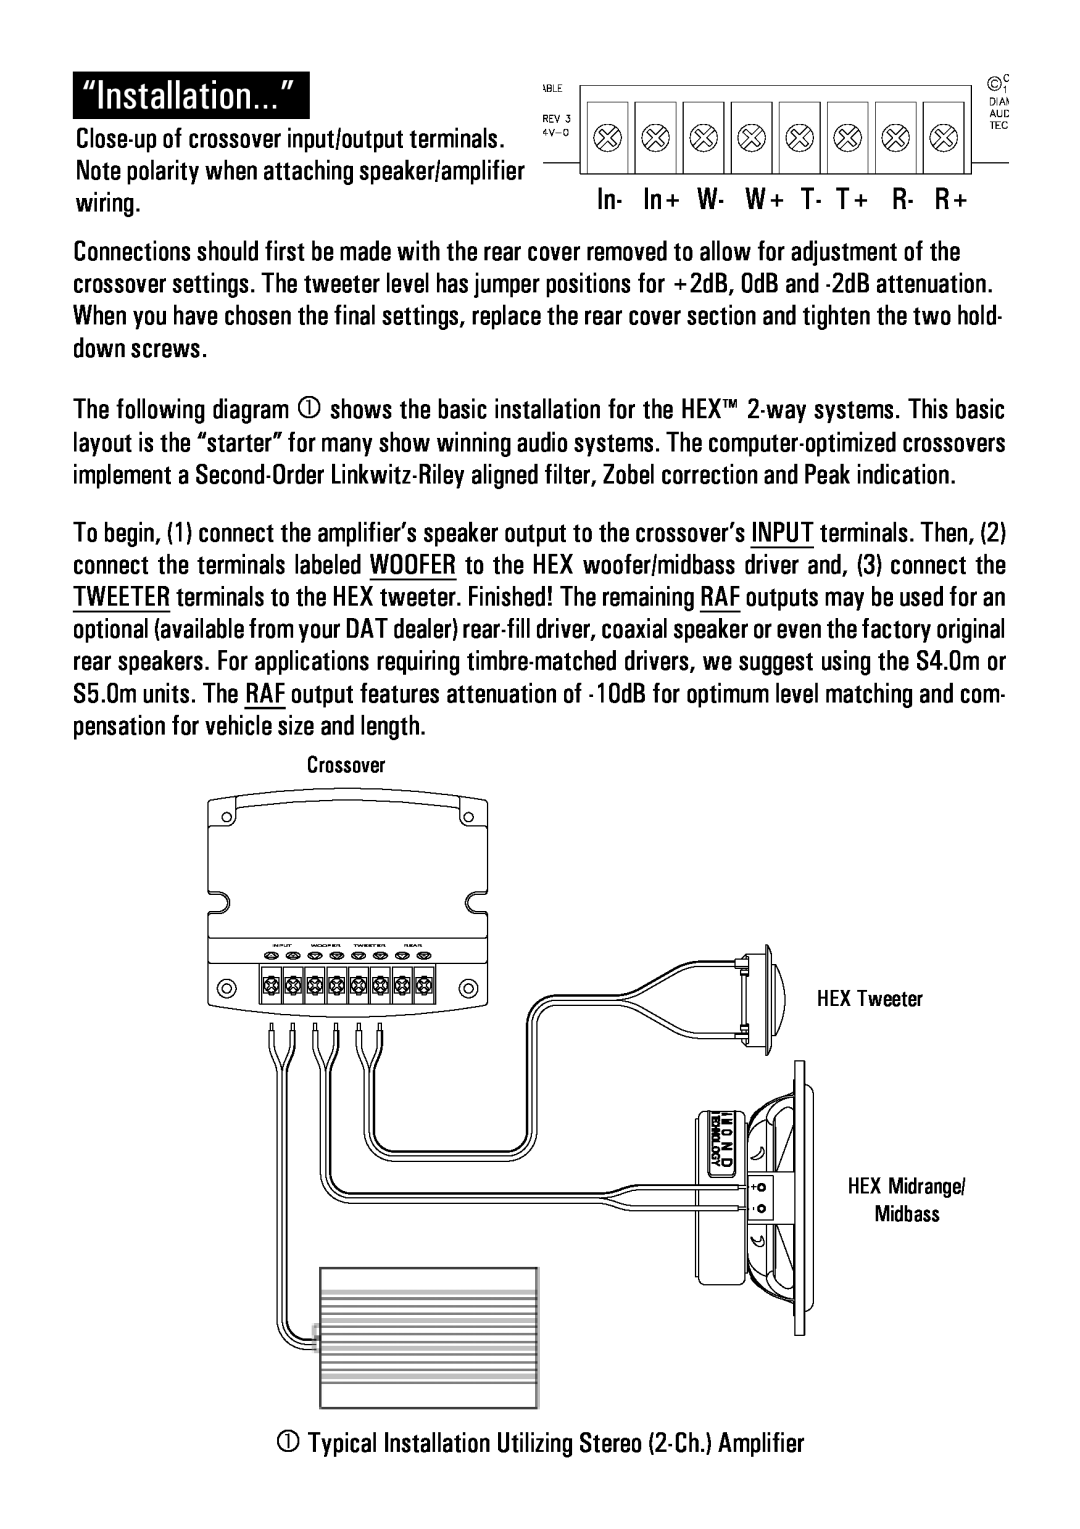 Diamond Audio Technology S600, S400, S500 manual “Installation…”, In- In+ W- W+ T- T+ R- R+, wiring 